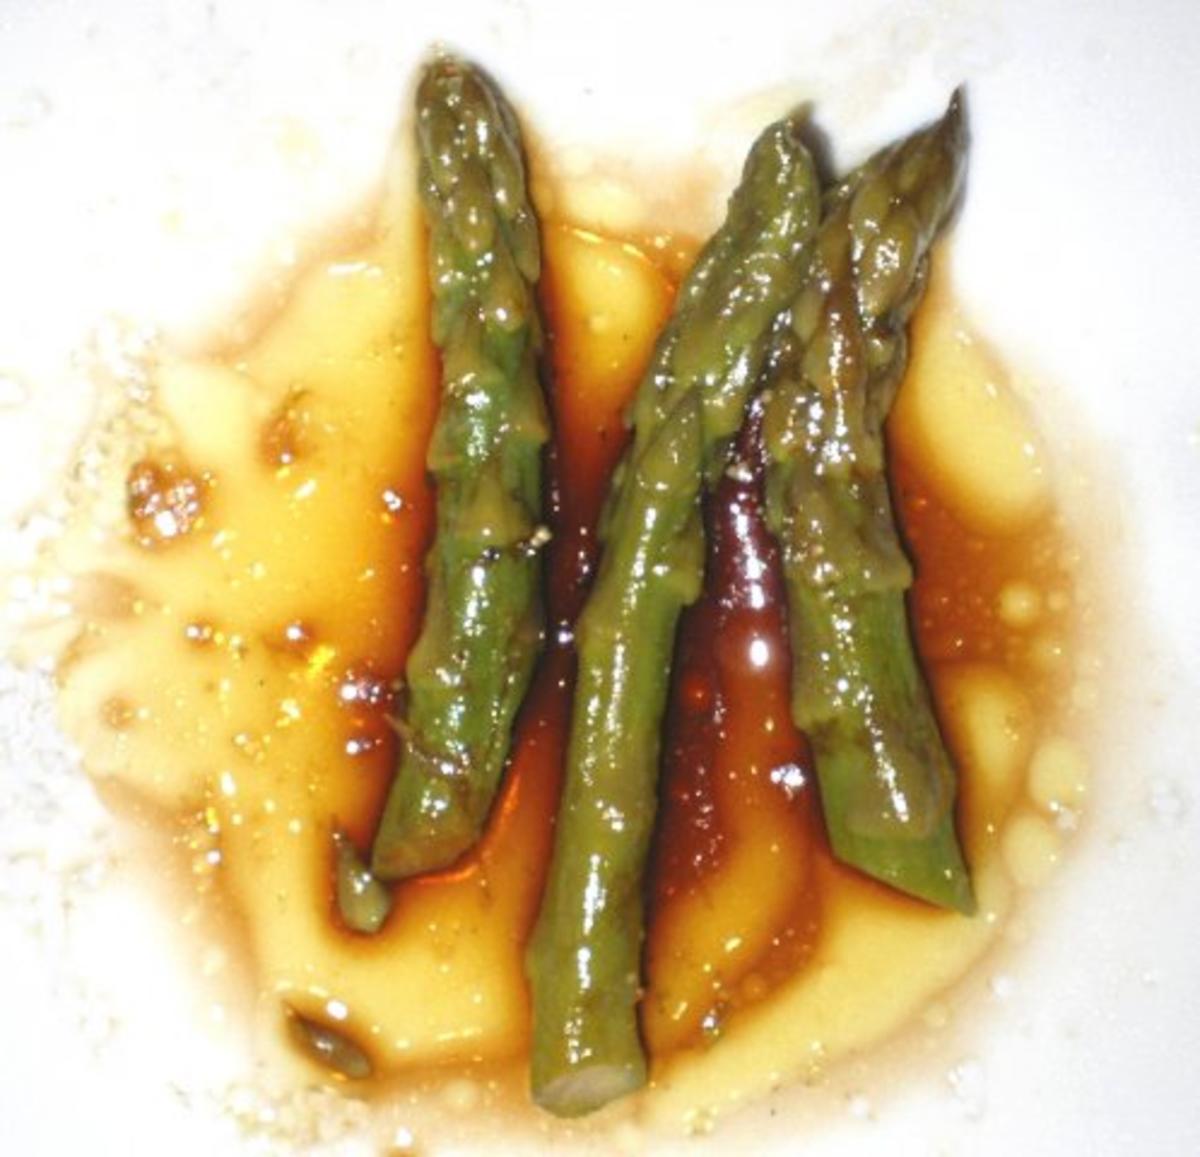 Spargel Salat mit Soja-Chili-Essig-Öl Dressing - Rezept